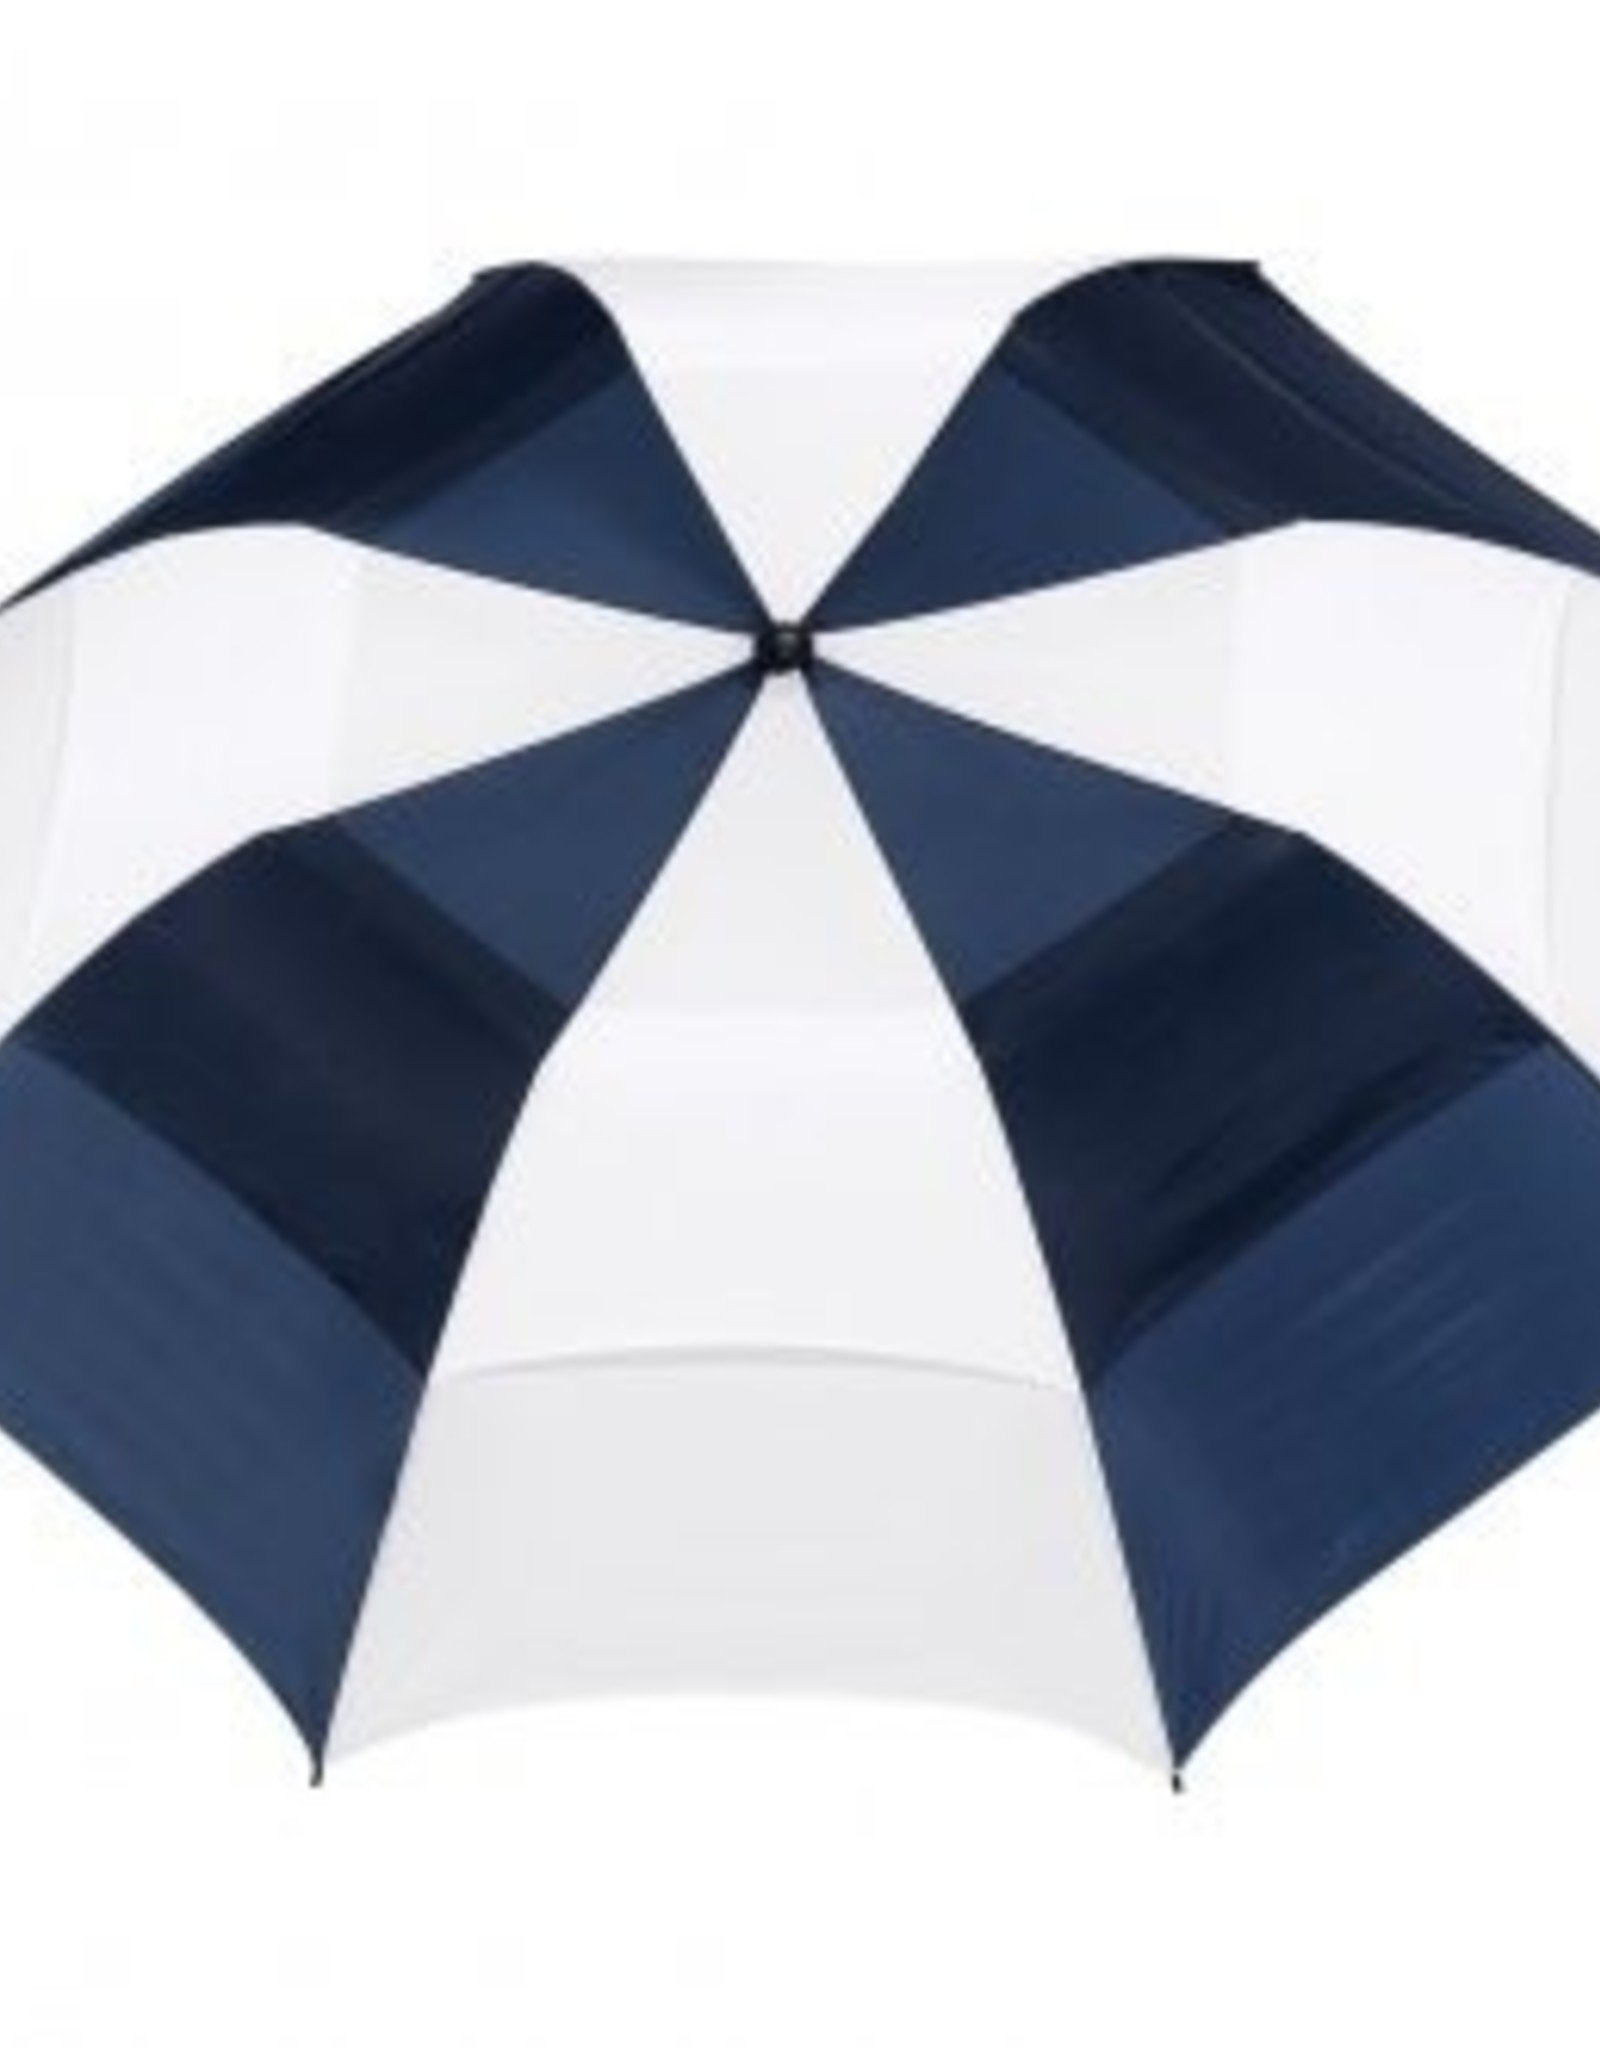 NON-UNIFORM JD Large Golf Stripe Umbrella